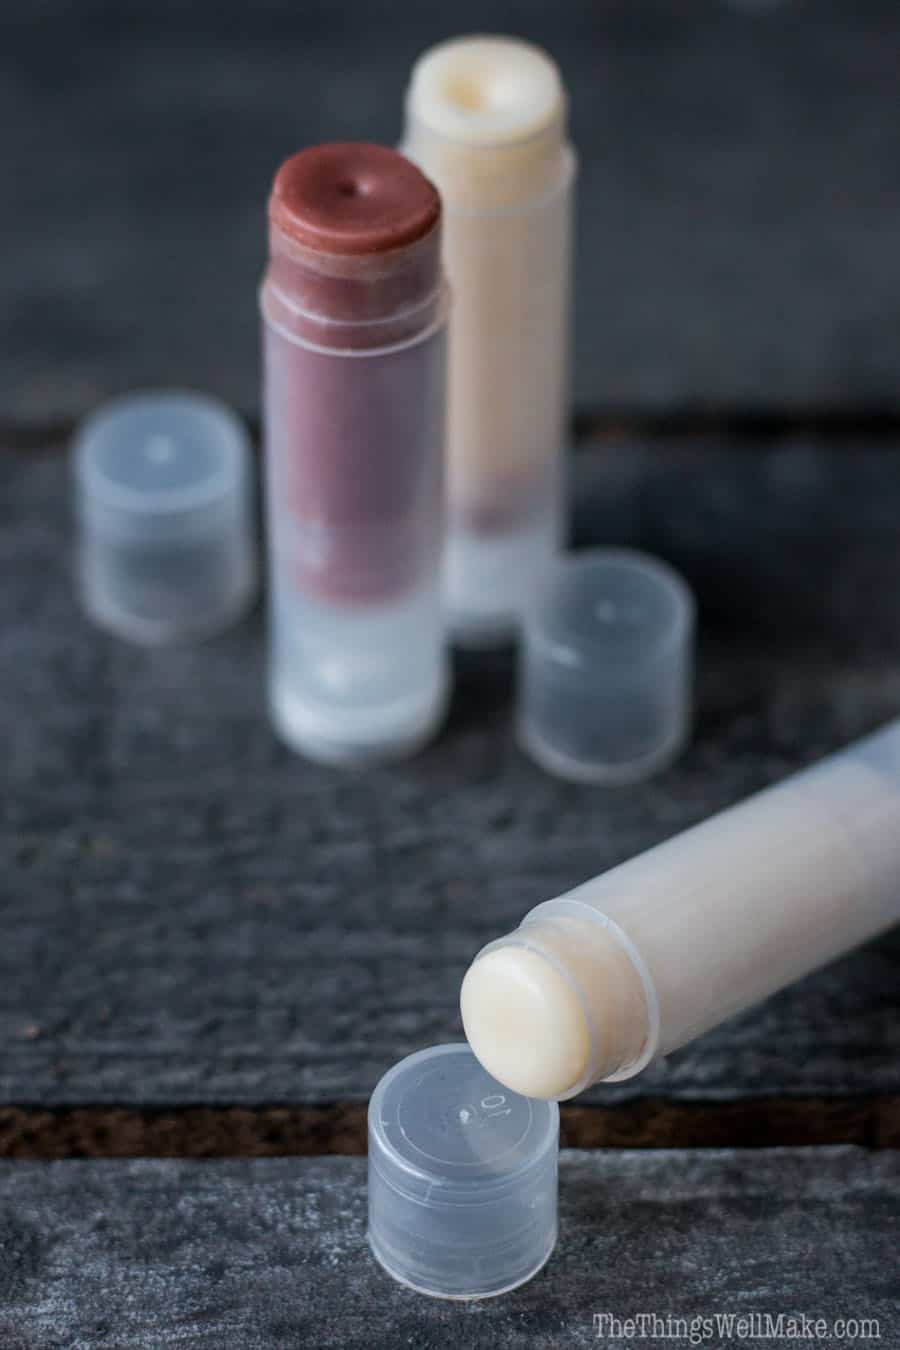 Homemade healing lip balm 15 sticks of homemade lip balm and scrub for dry winter lips